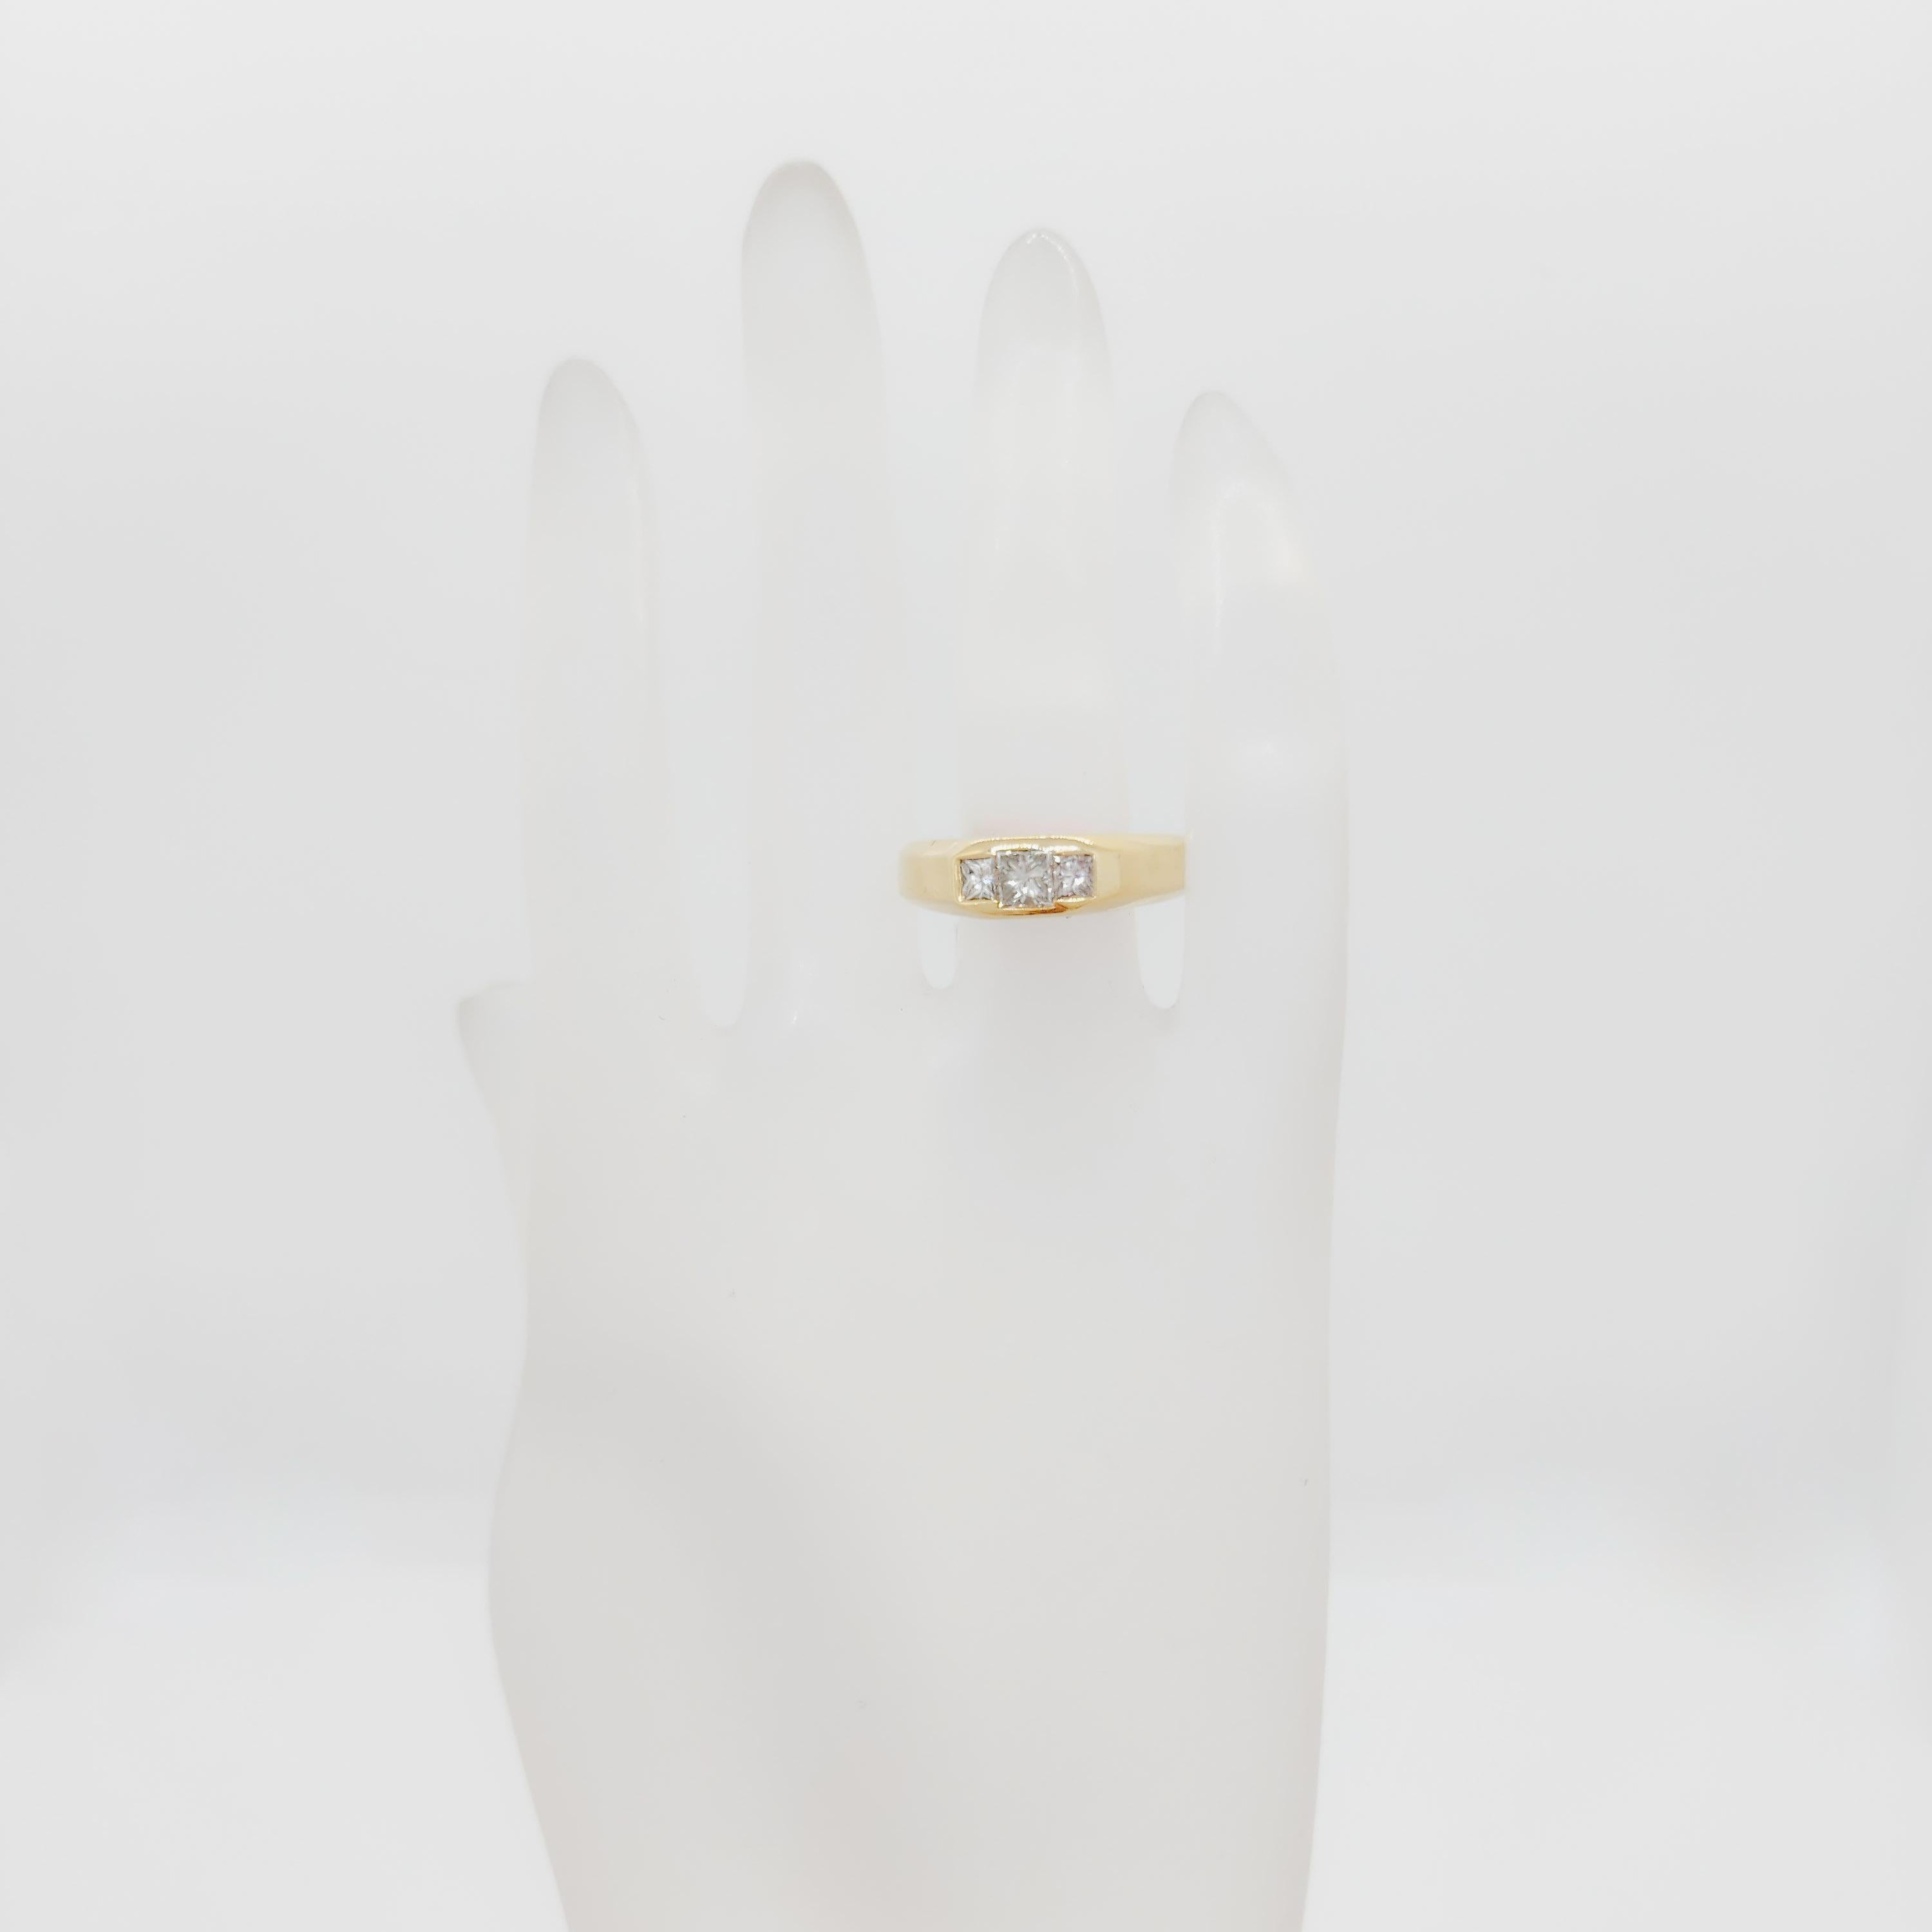 Beautiful 0.75 ct. white diamond princess cuts (3 stones total).  Handmade 14k yellow gold mounting.  Ring size 10.